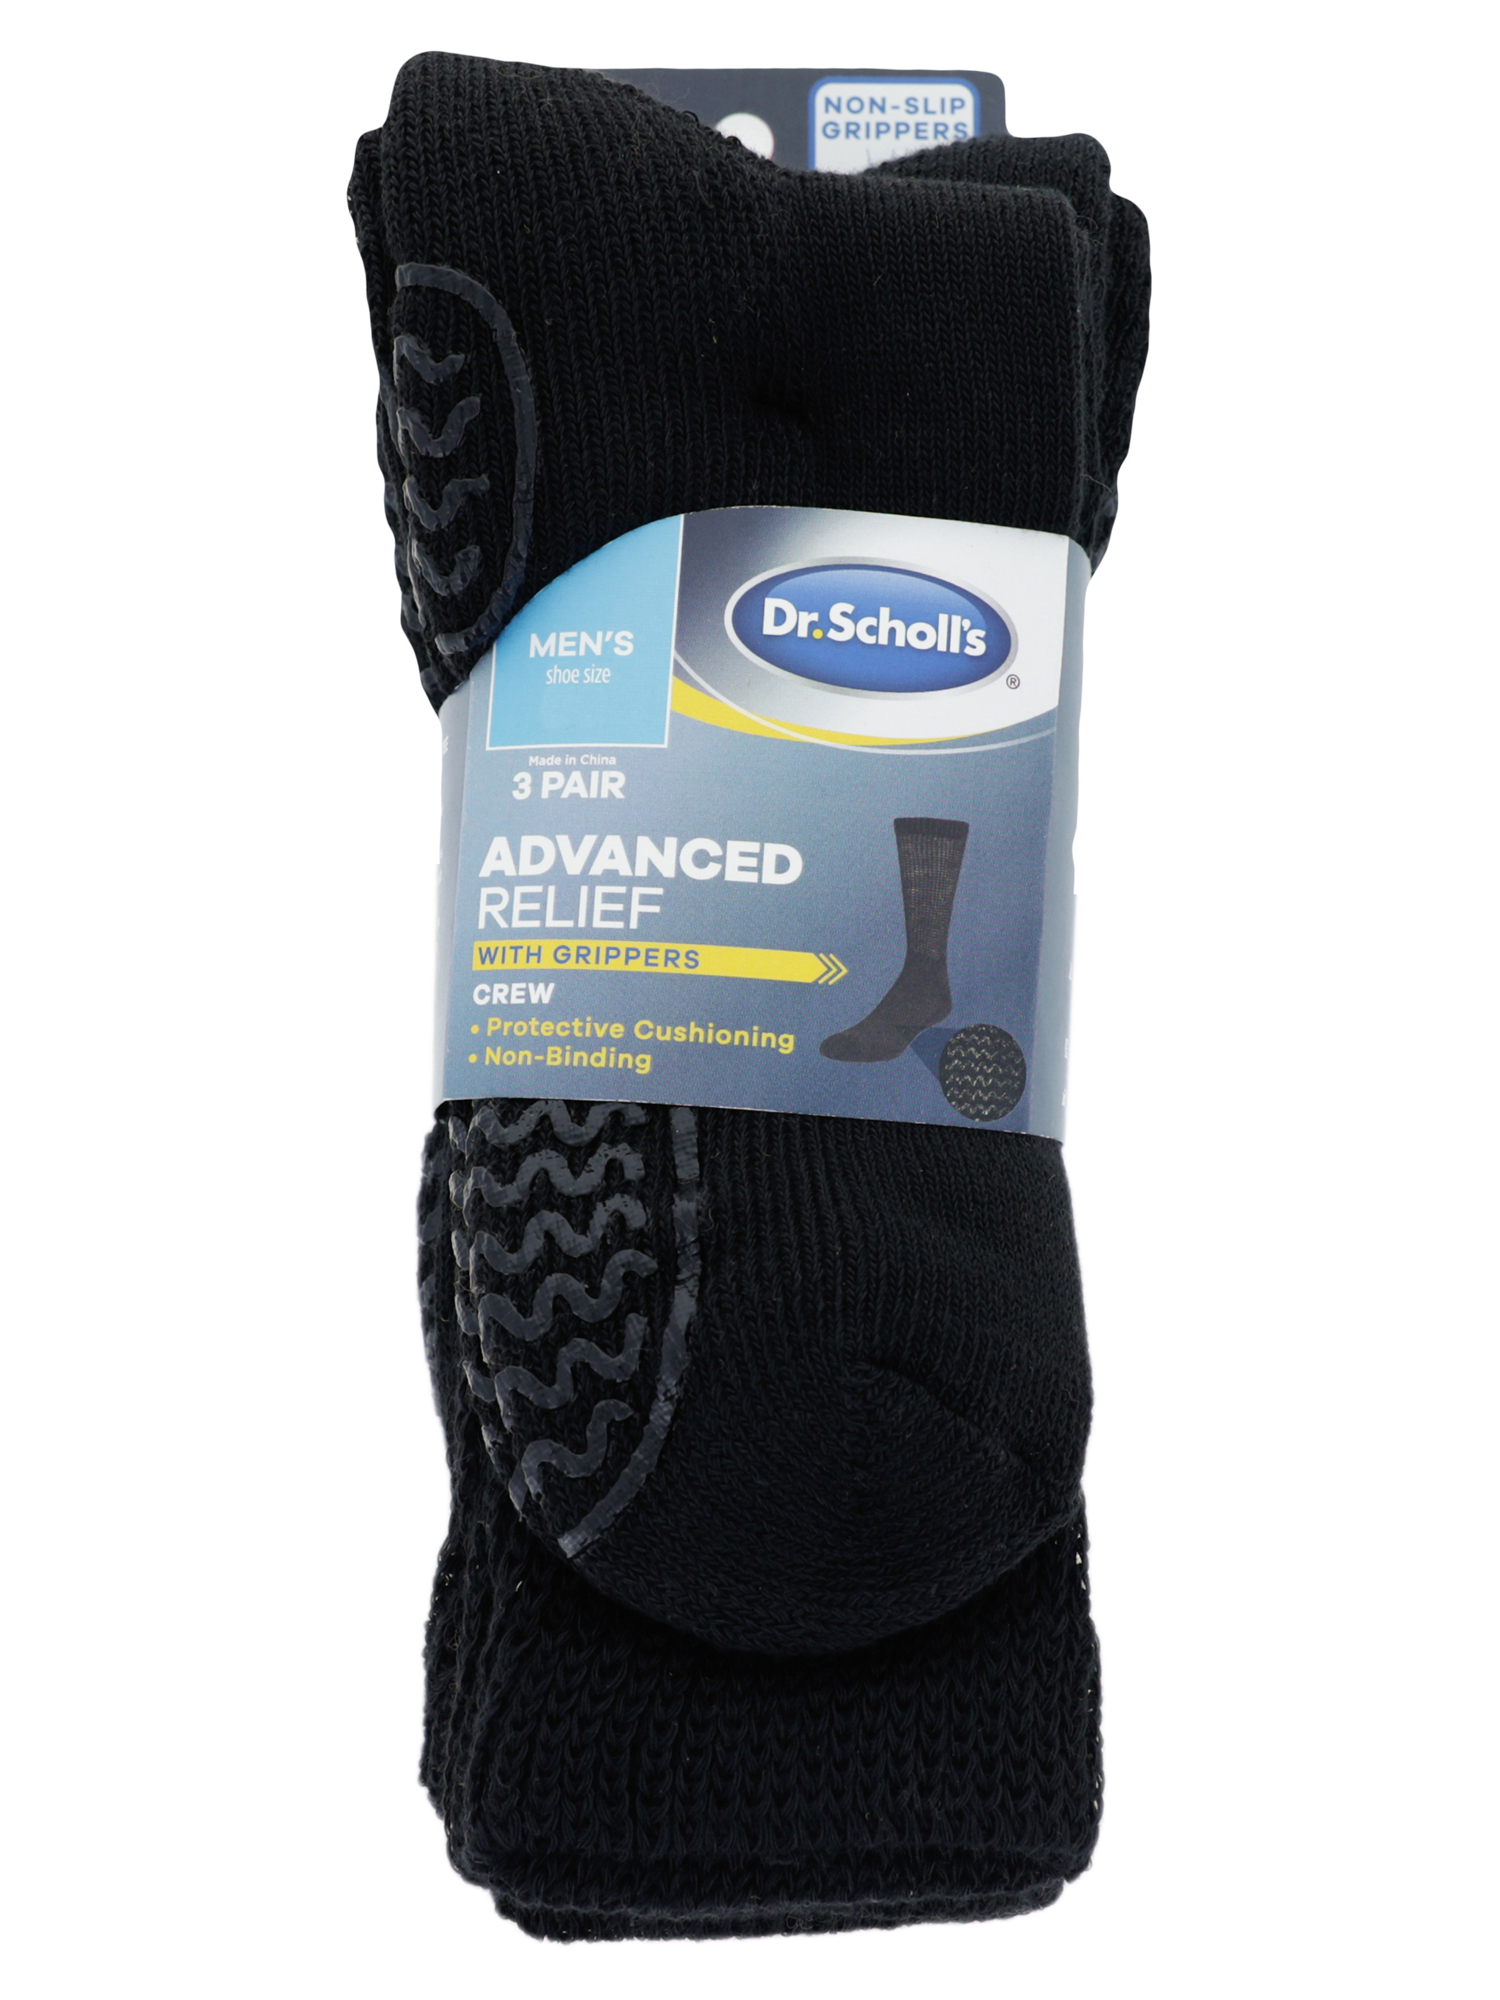 Dr. Scholl's Men's Advanced Relief Gripper Crew Socks, 3 Pack - Walmart.com